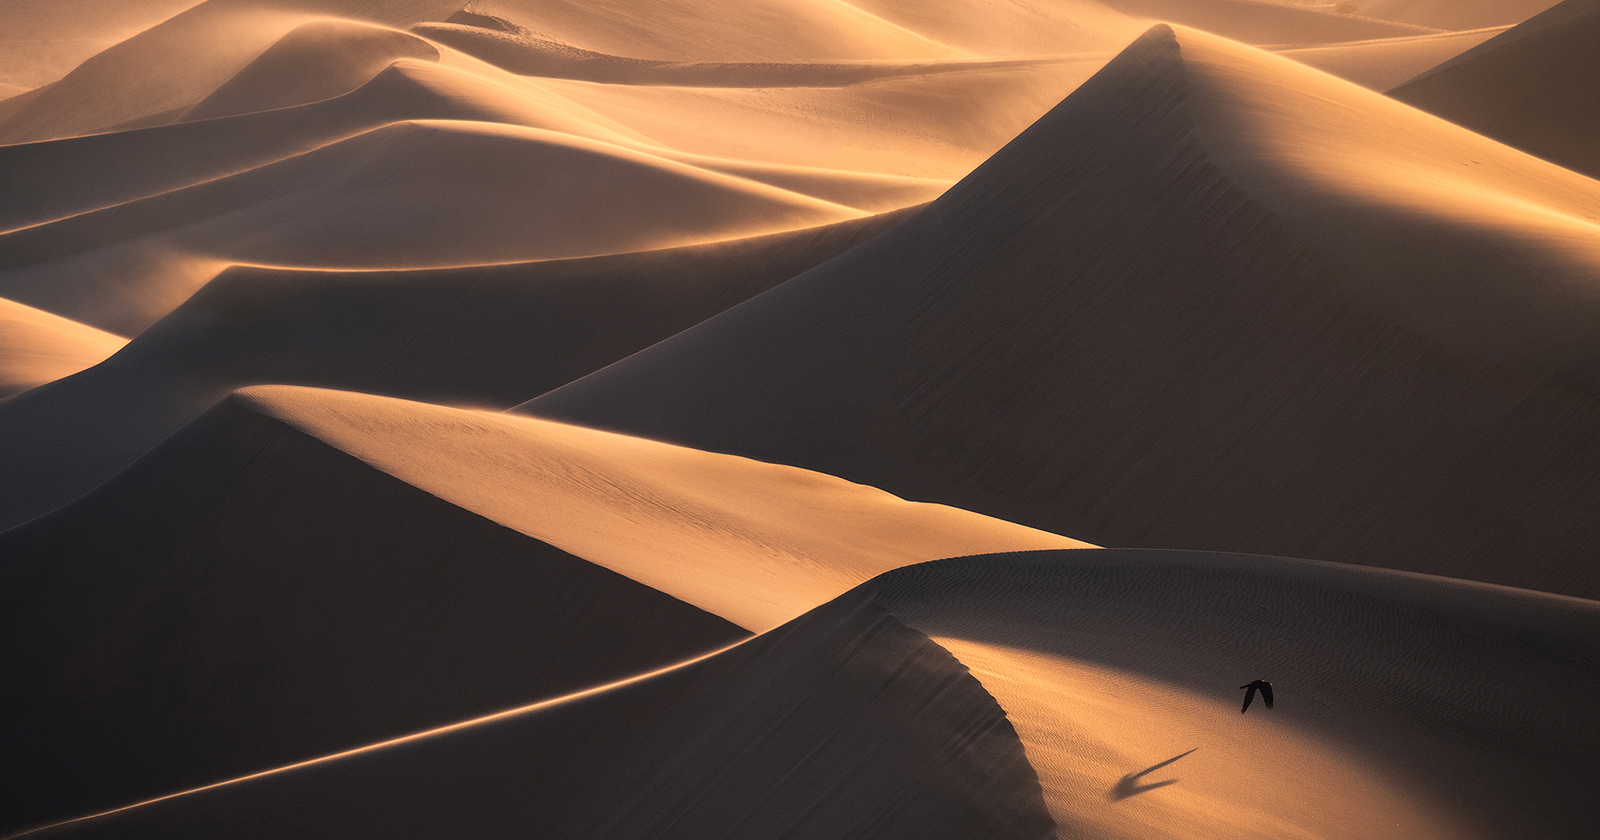 https://petapixel.com/assets/uploads/2021/05/Michael-Shainblum-Death-Valley-Sand-Dunes-1.png